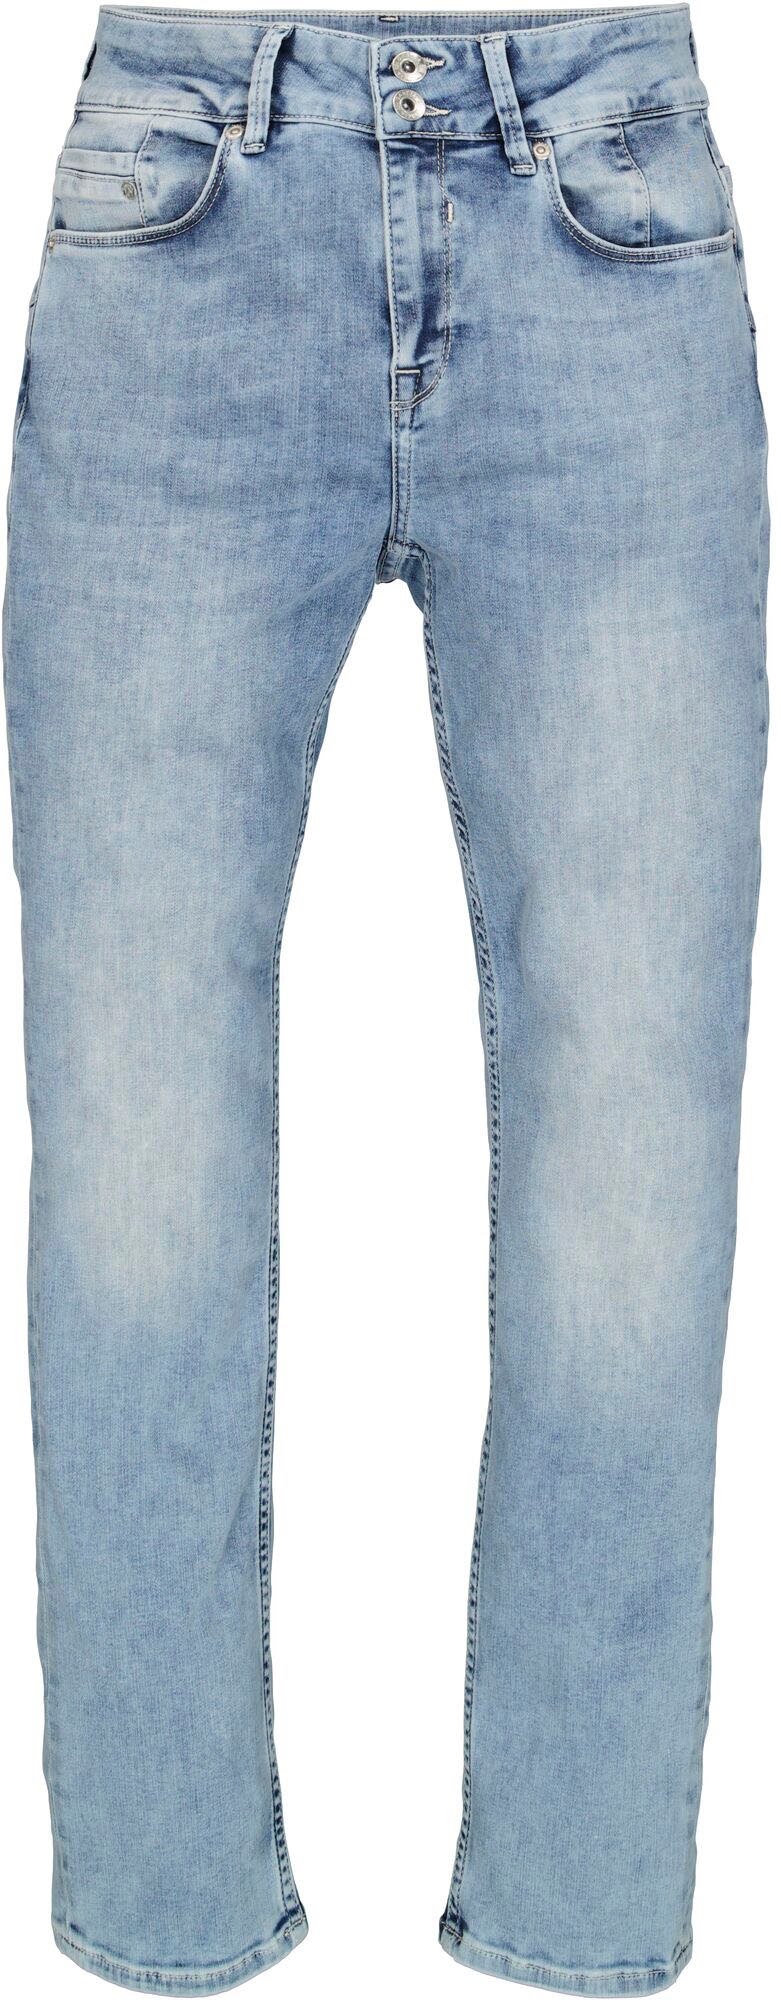 Garcia Slim-fit-Jeans »Caro slim curved« bestellen